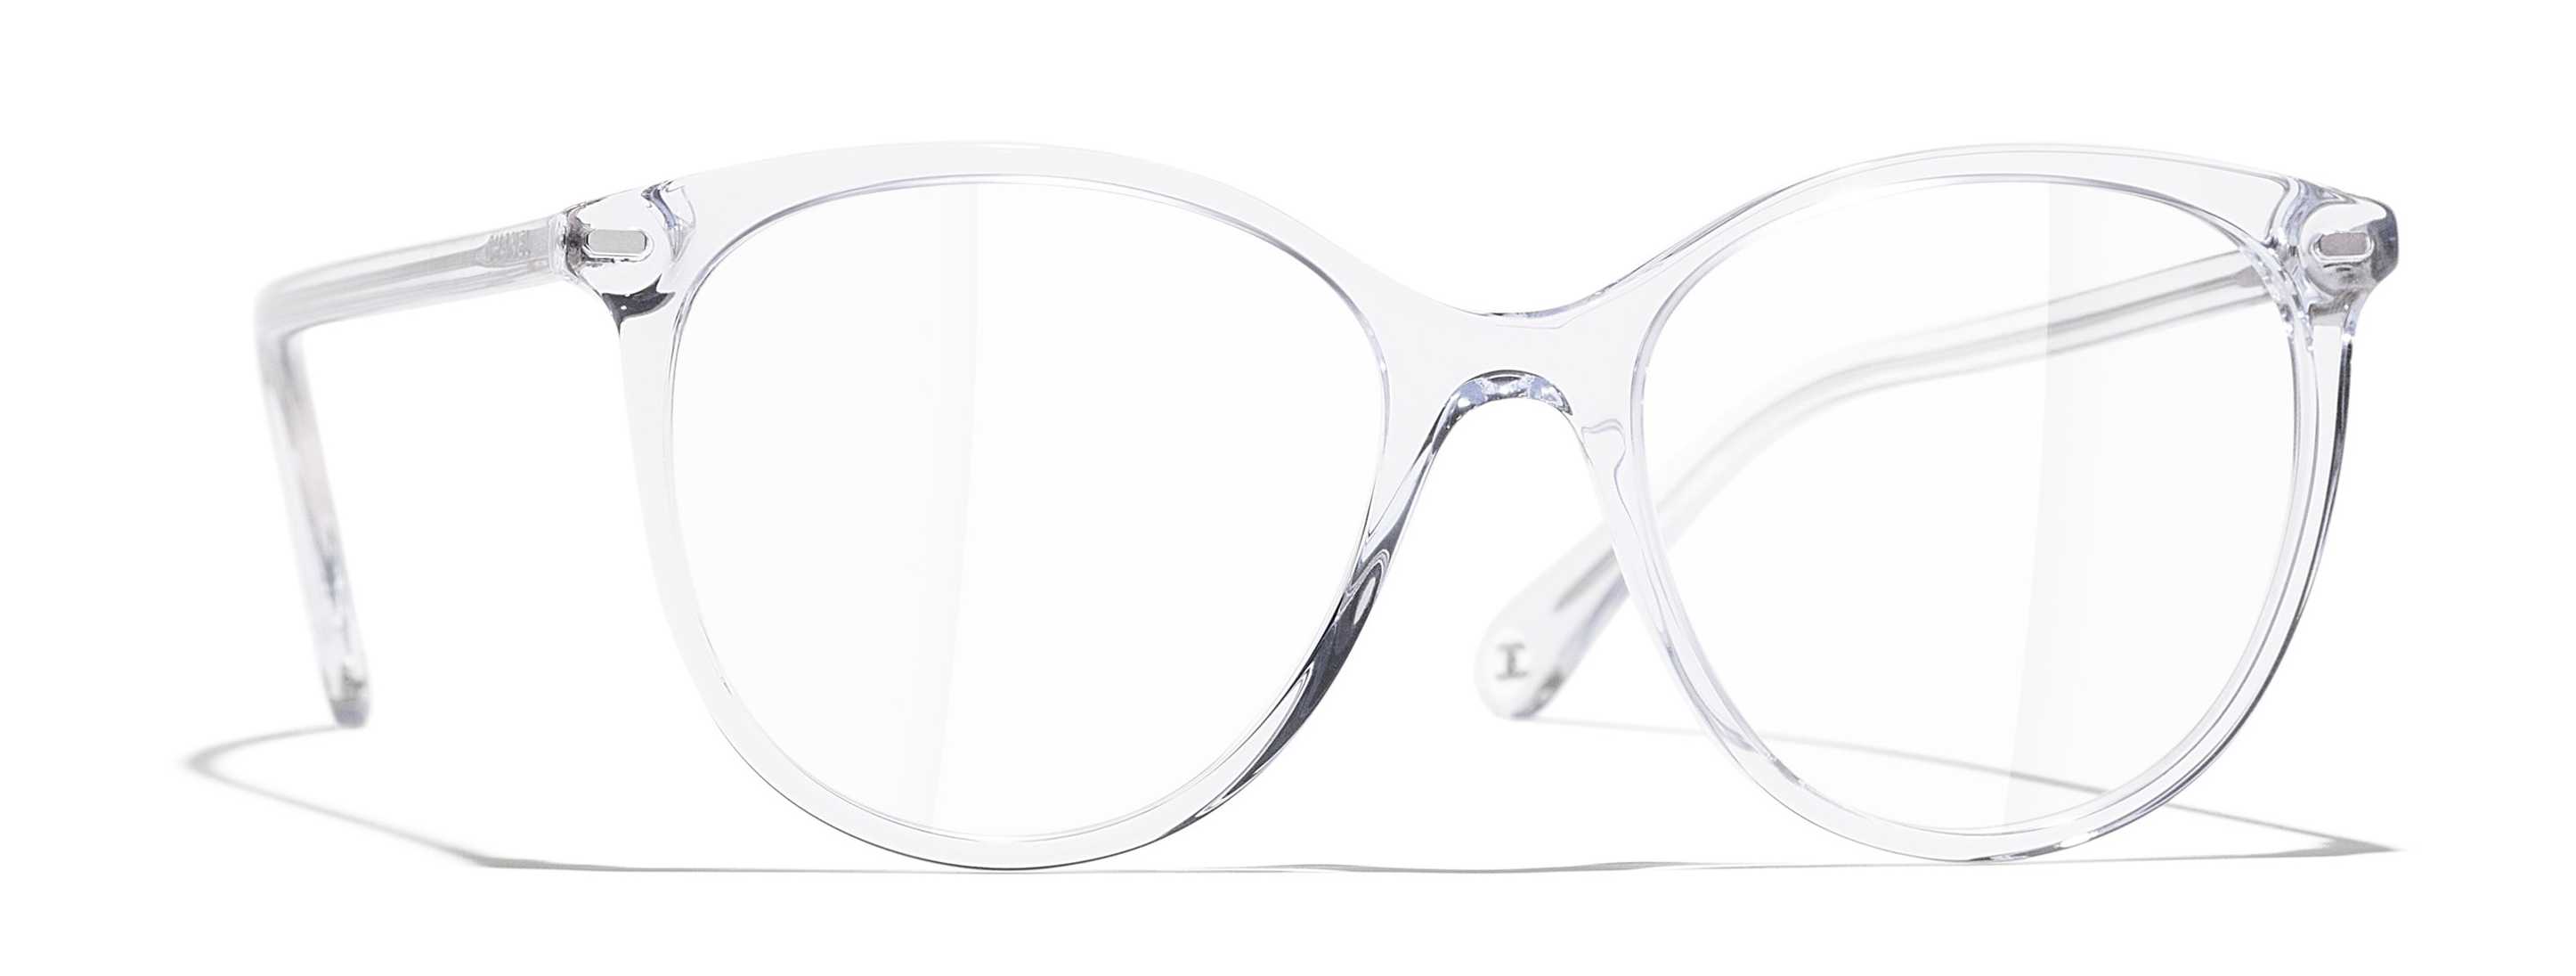 Eyeglasses CHANEL CH 3412 C660 53/17 Woman Transparent Pantos Full Frame  Glasses trendy 53mmx17mm 269$CA